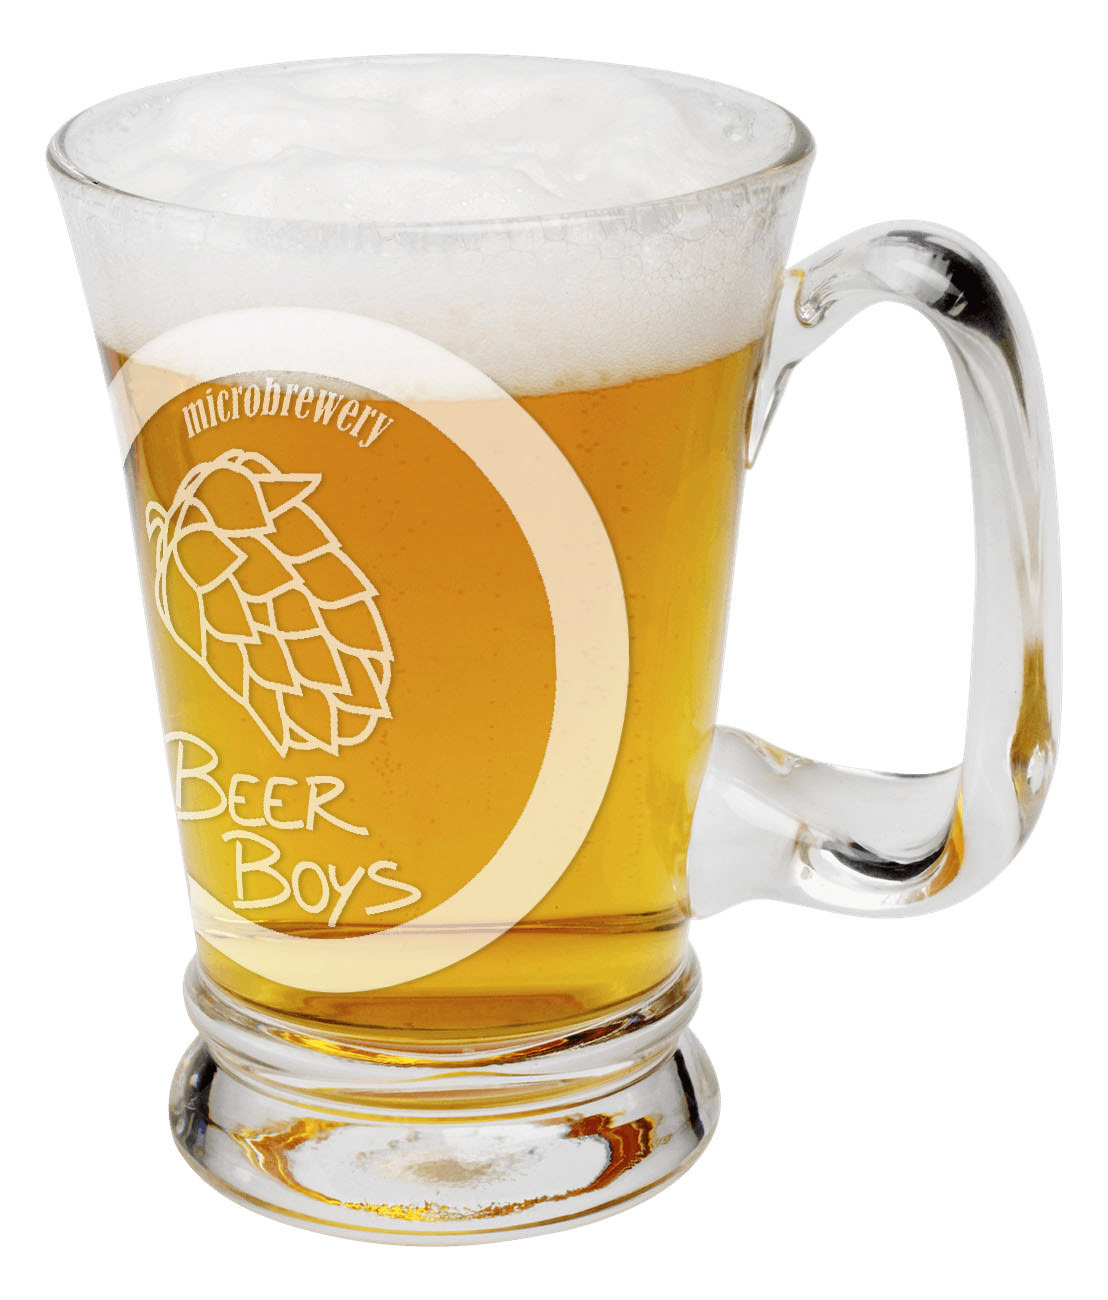 logo Logo Design brewery hops beer business card product design 